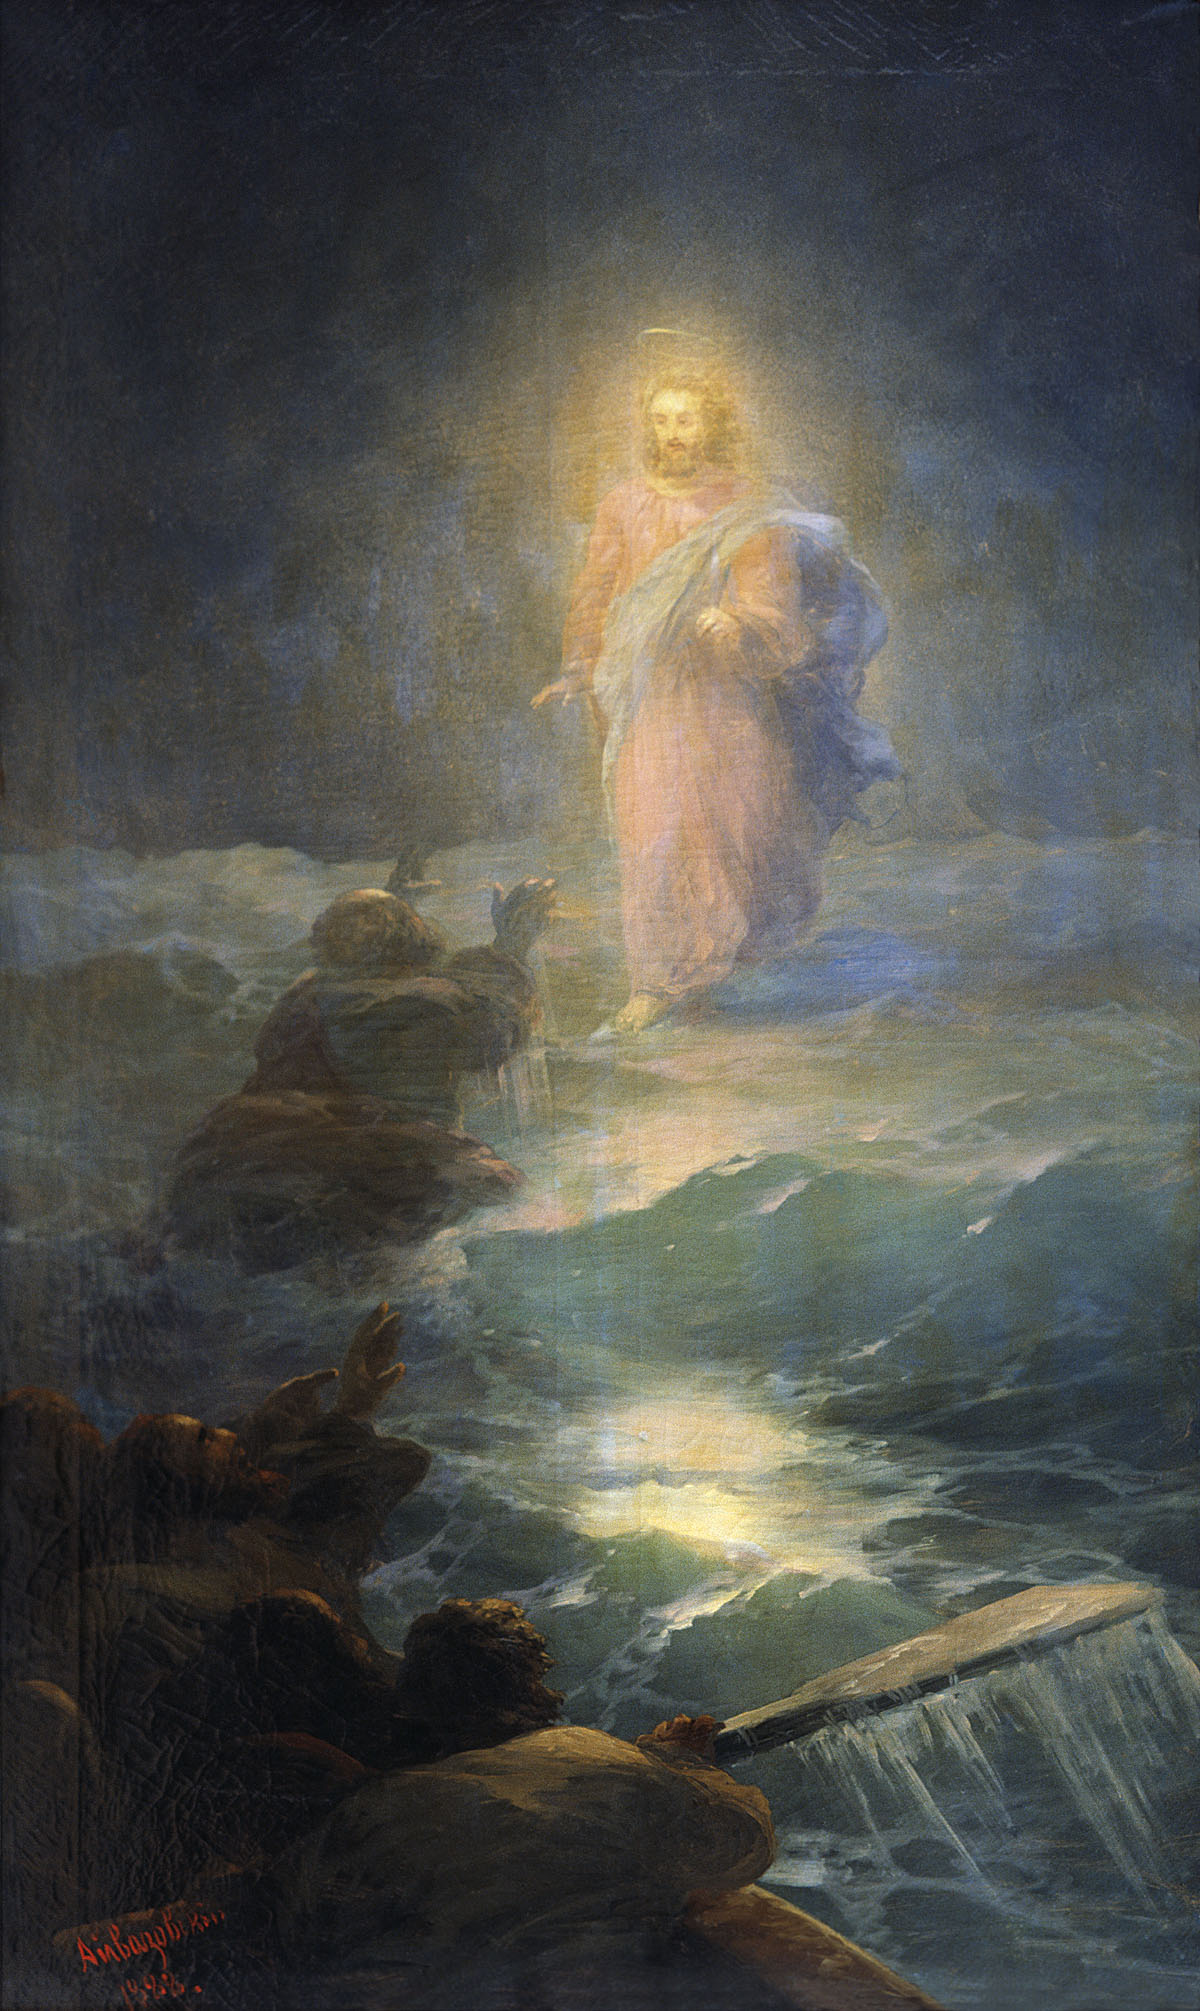 Jesus walks on water (1888).